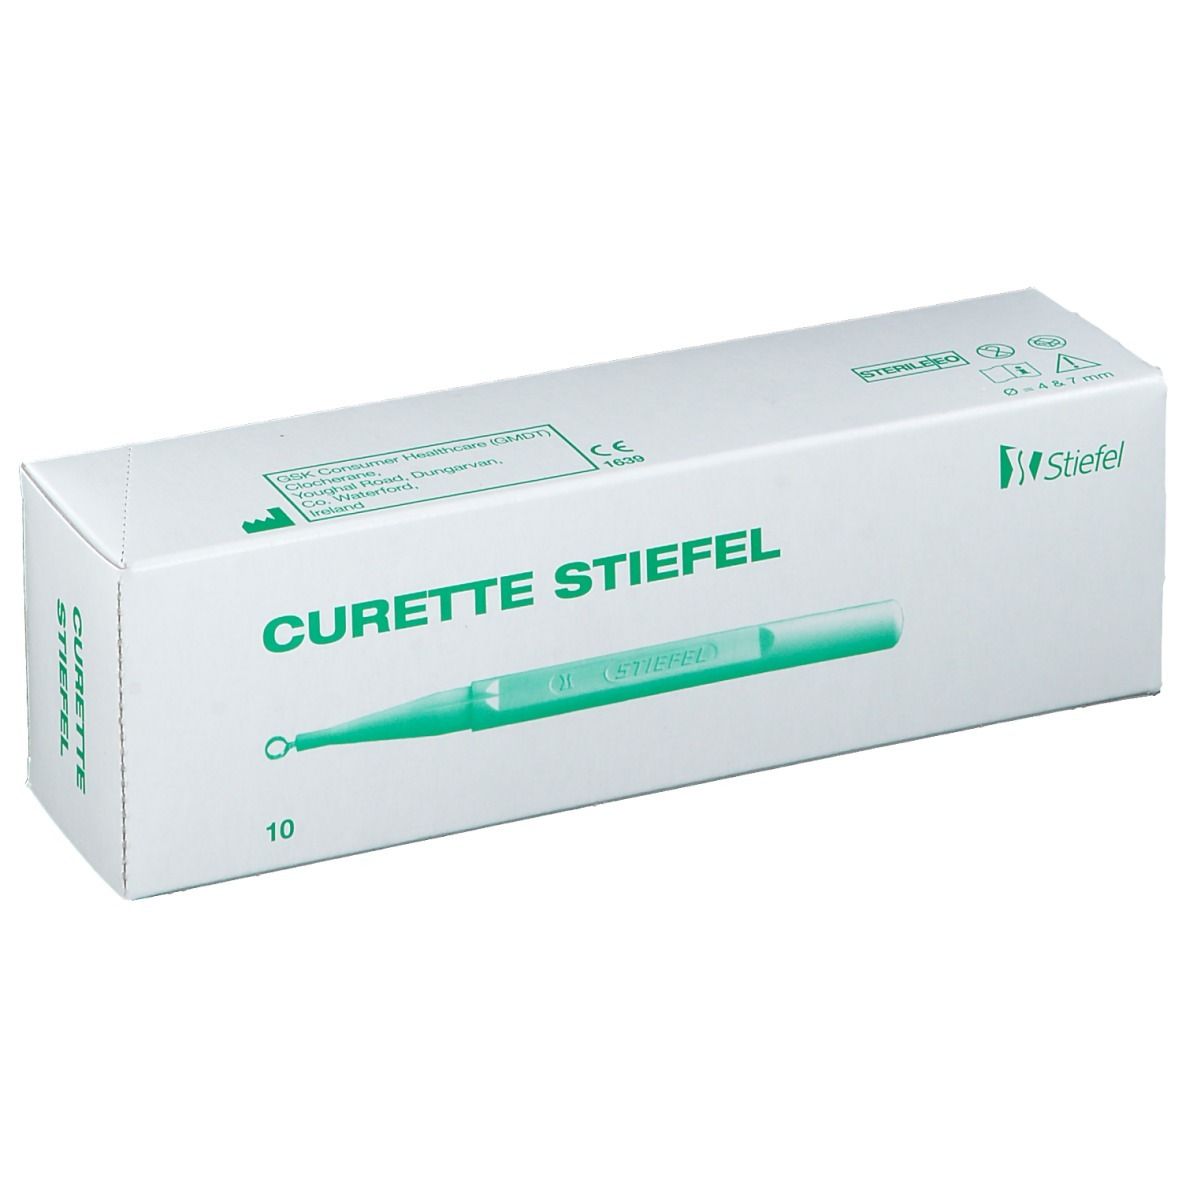 Image of Curette Stiefel 4mm